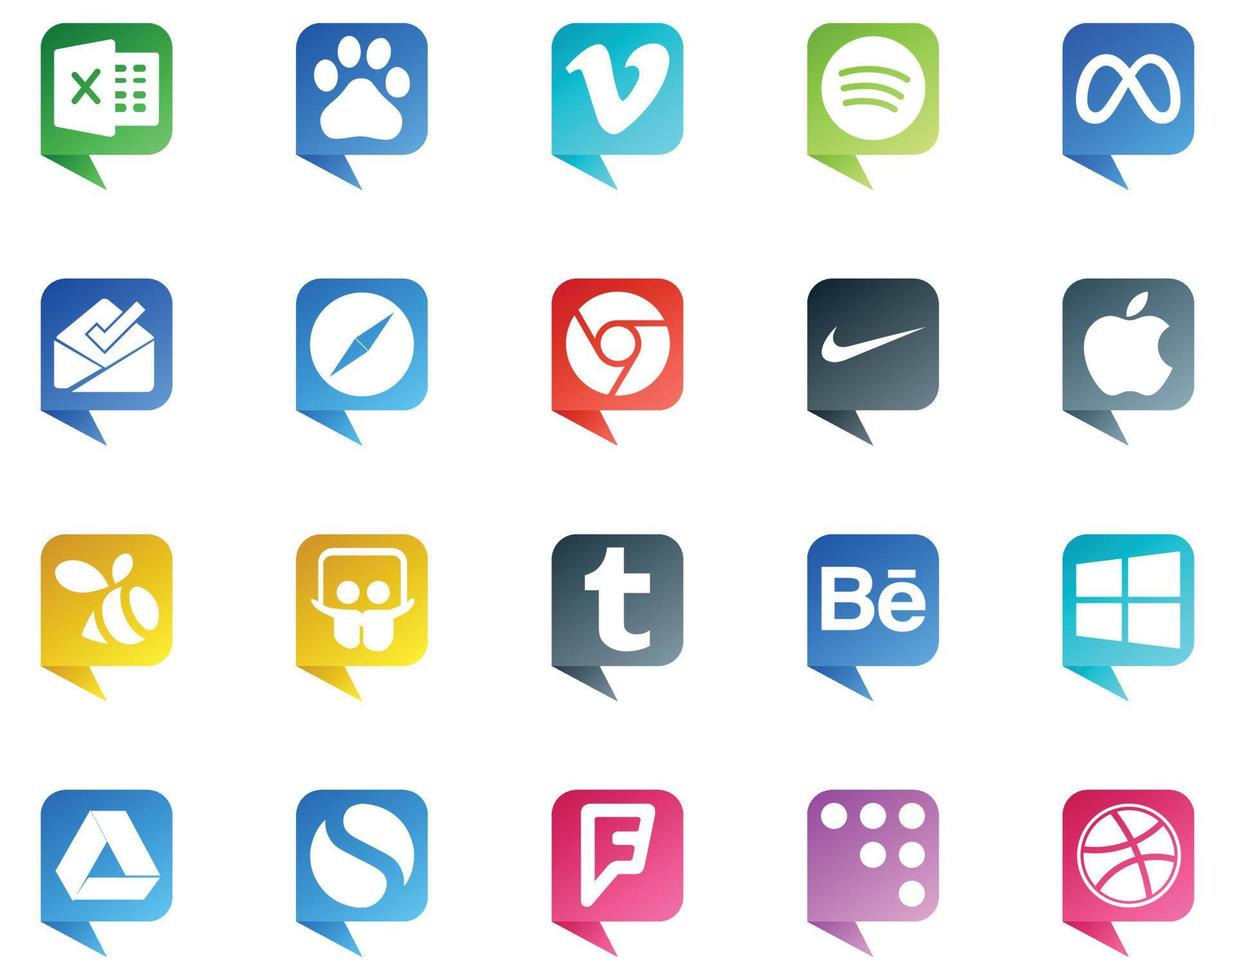 20 sociaal media toespraak bubbel stijl logo Leuk vinden ramen tumblr safari dia delen appel vector